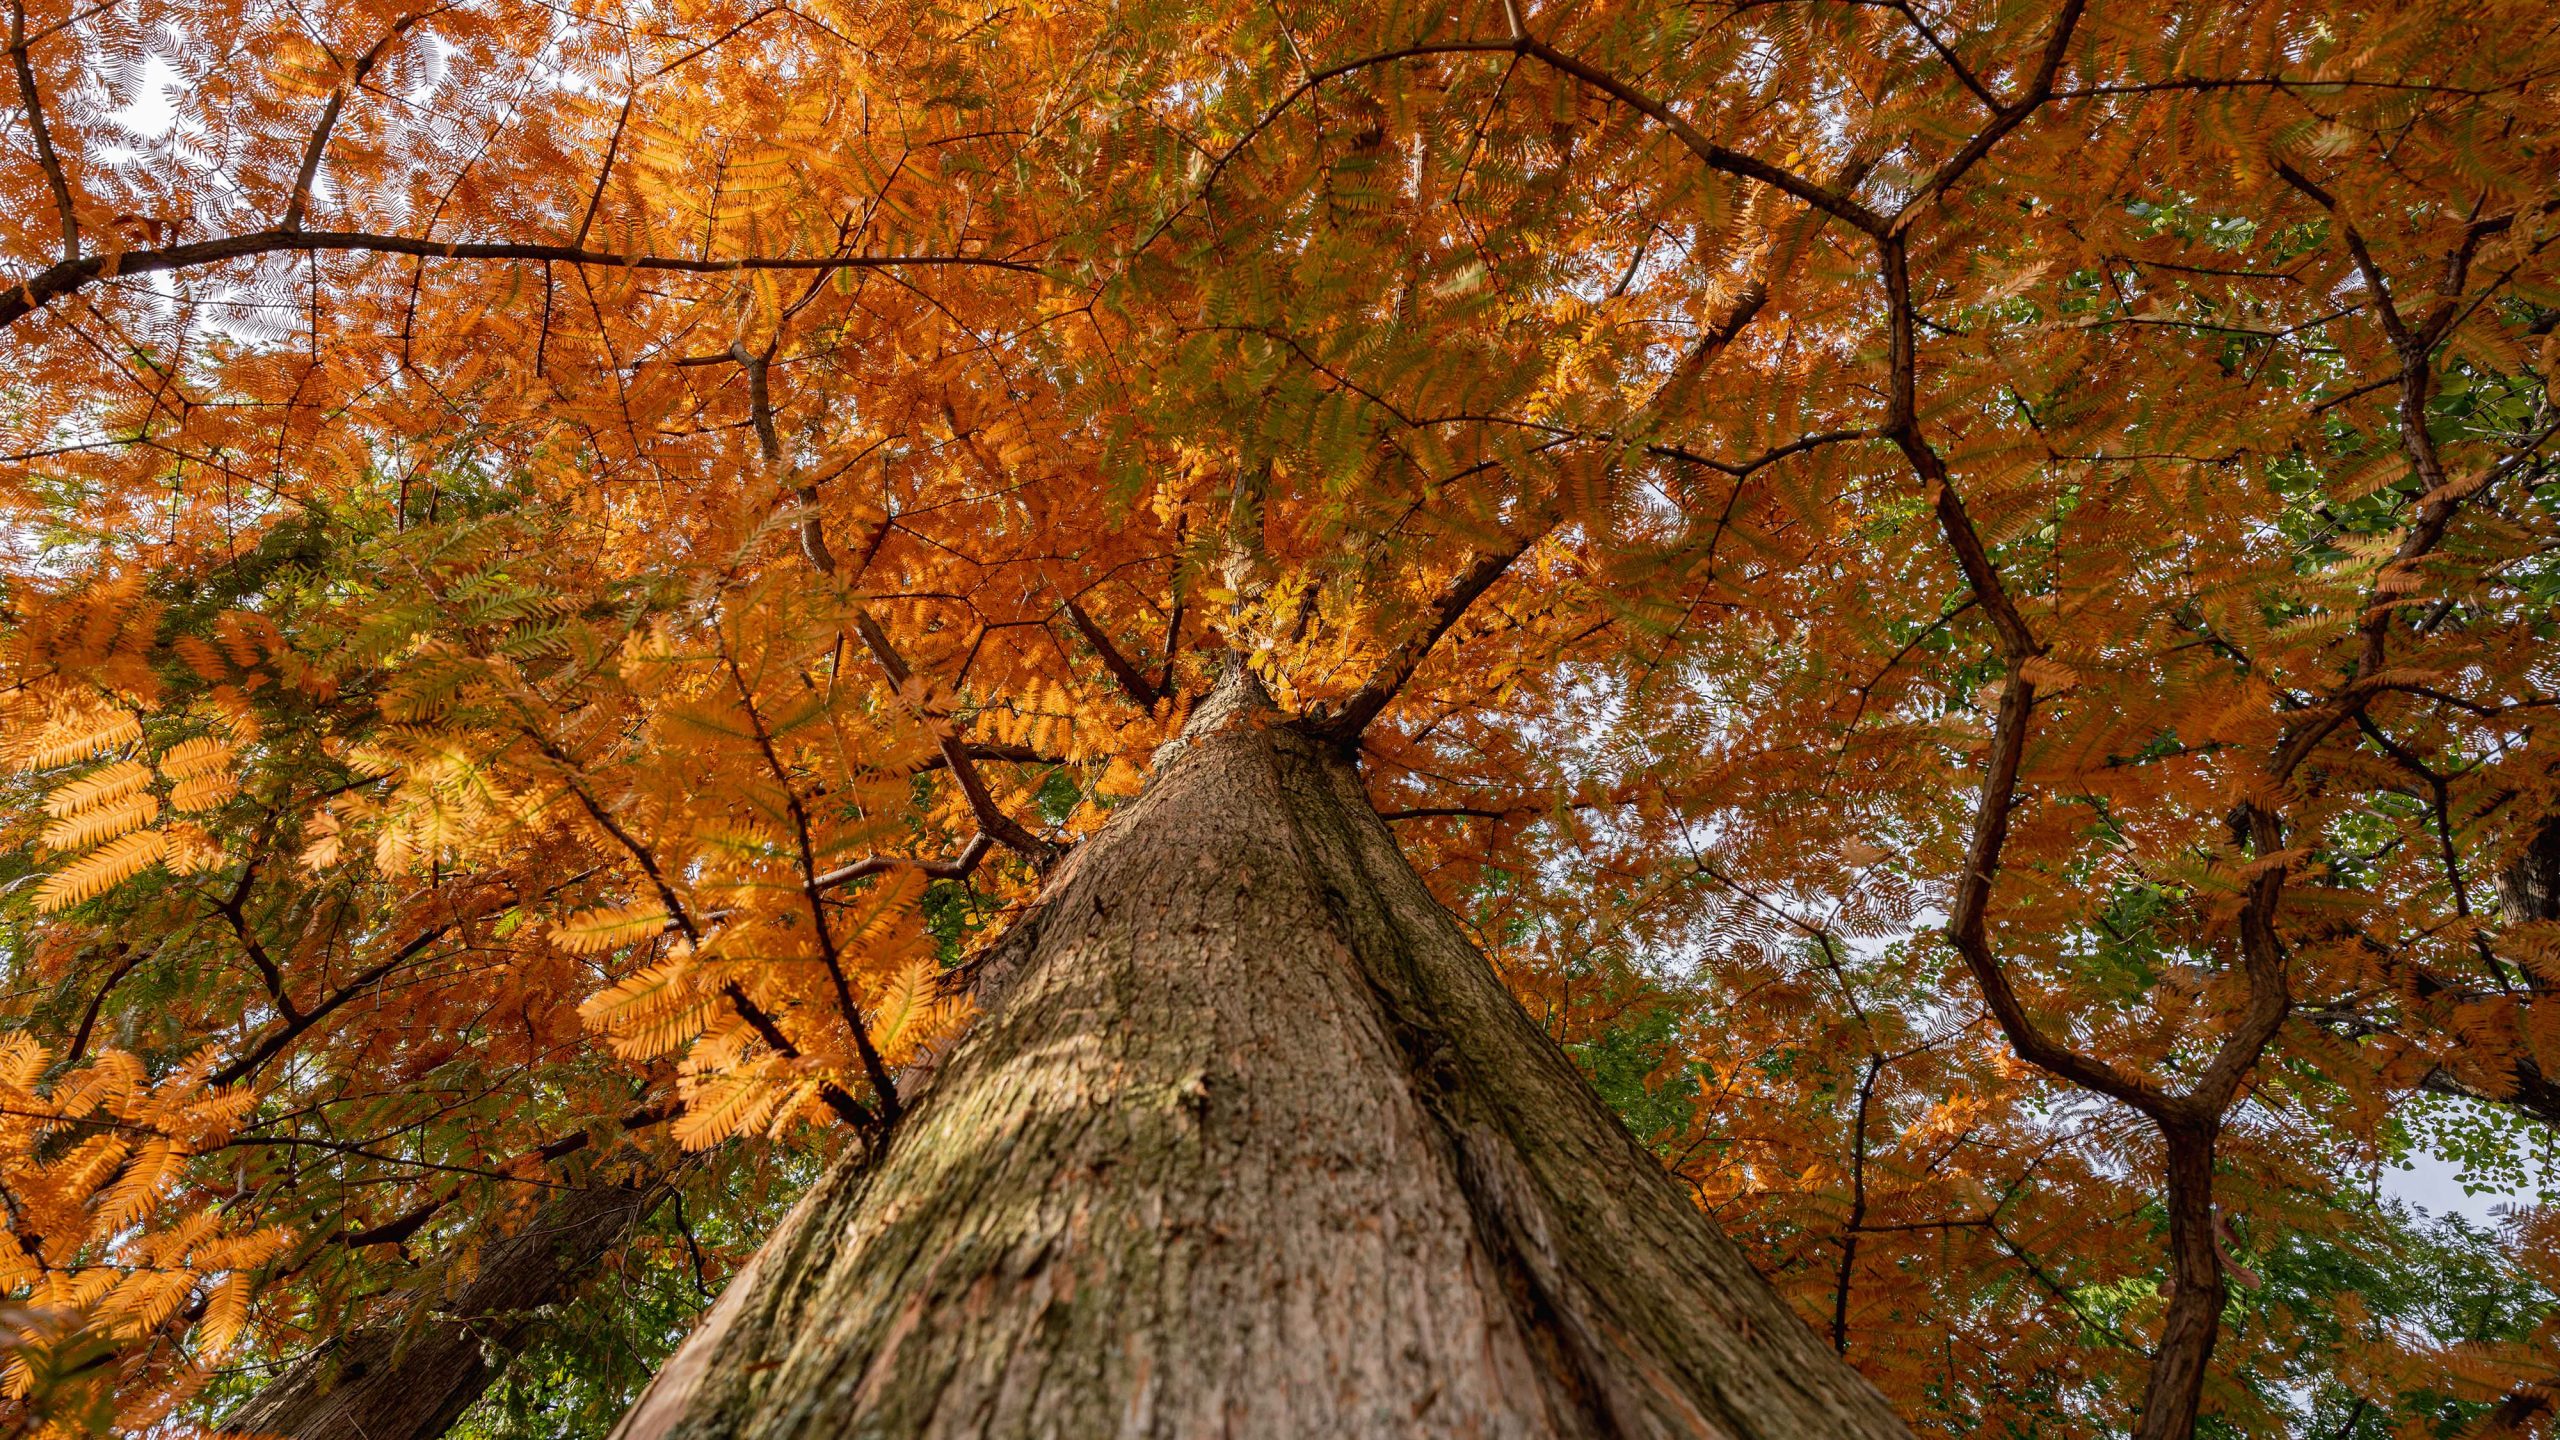 Upward looking image of a large tree in orange fall foliage